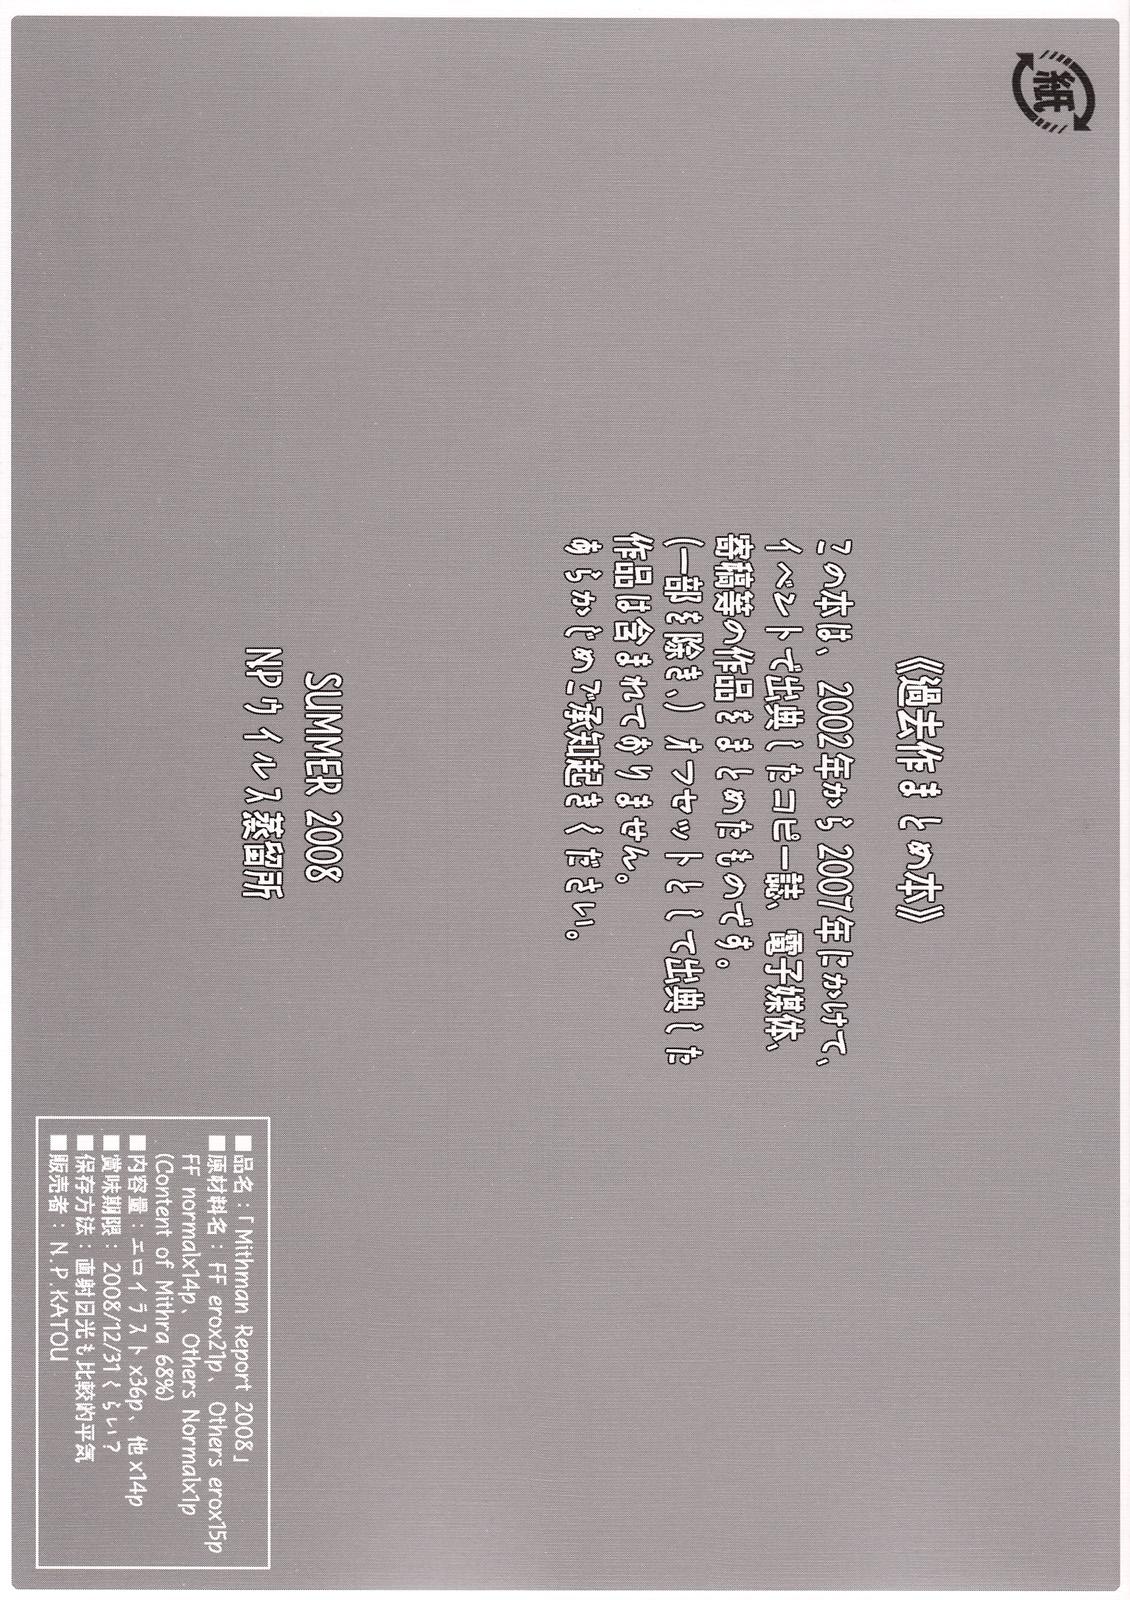 Naija Mithman Report 2008 - Final fantasy xi Music - Page 56